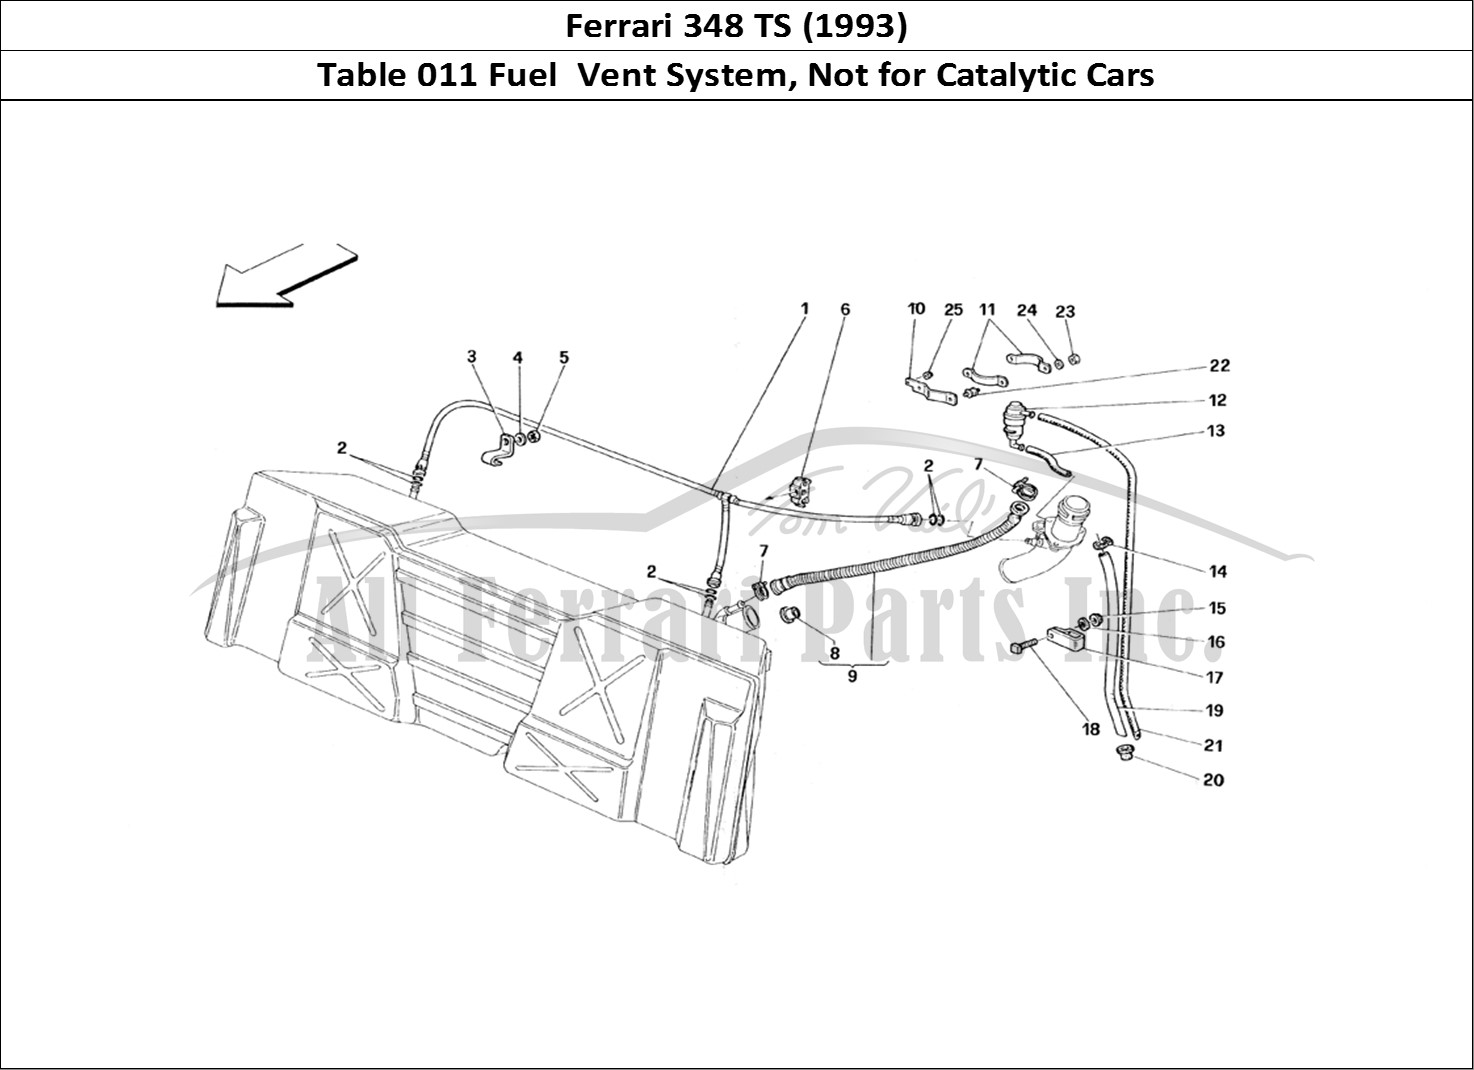 Ferrari Parts Ferrari 348 TB (1993) Page 011 Gasoline Vent System - No